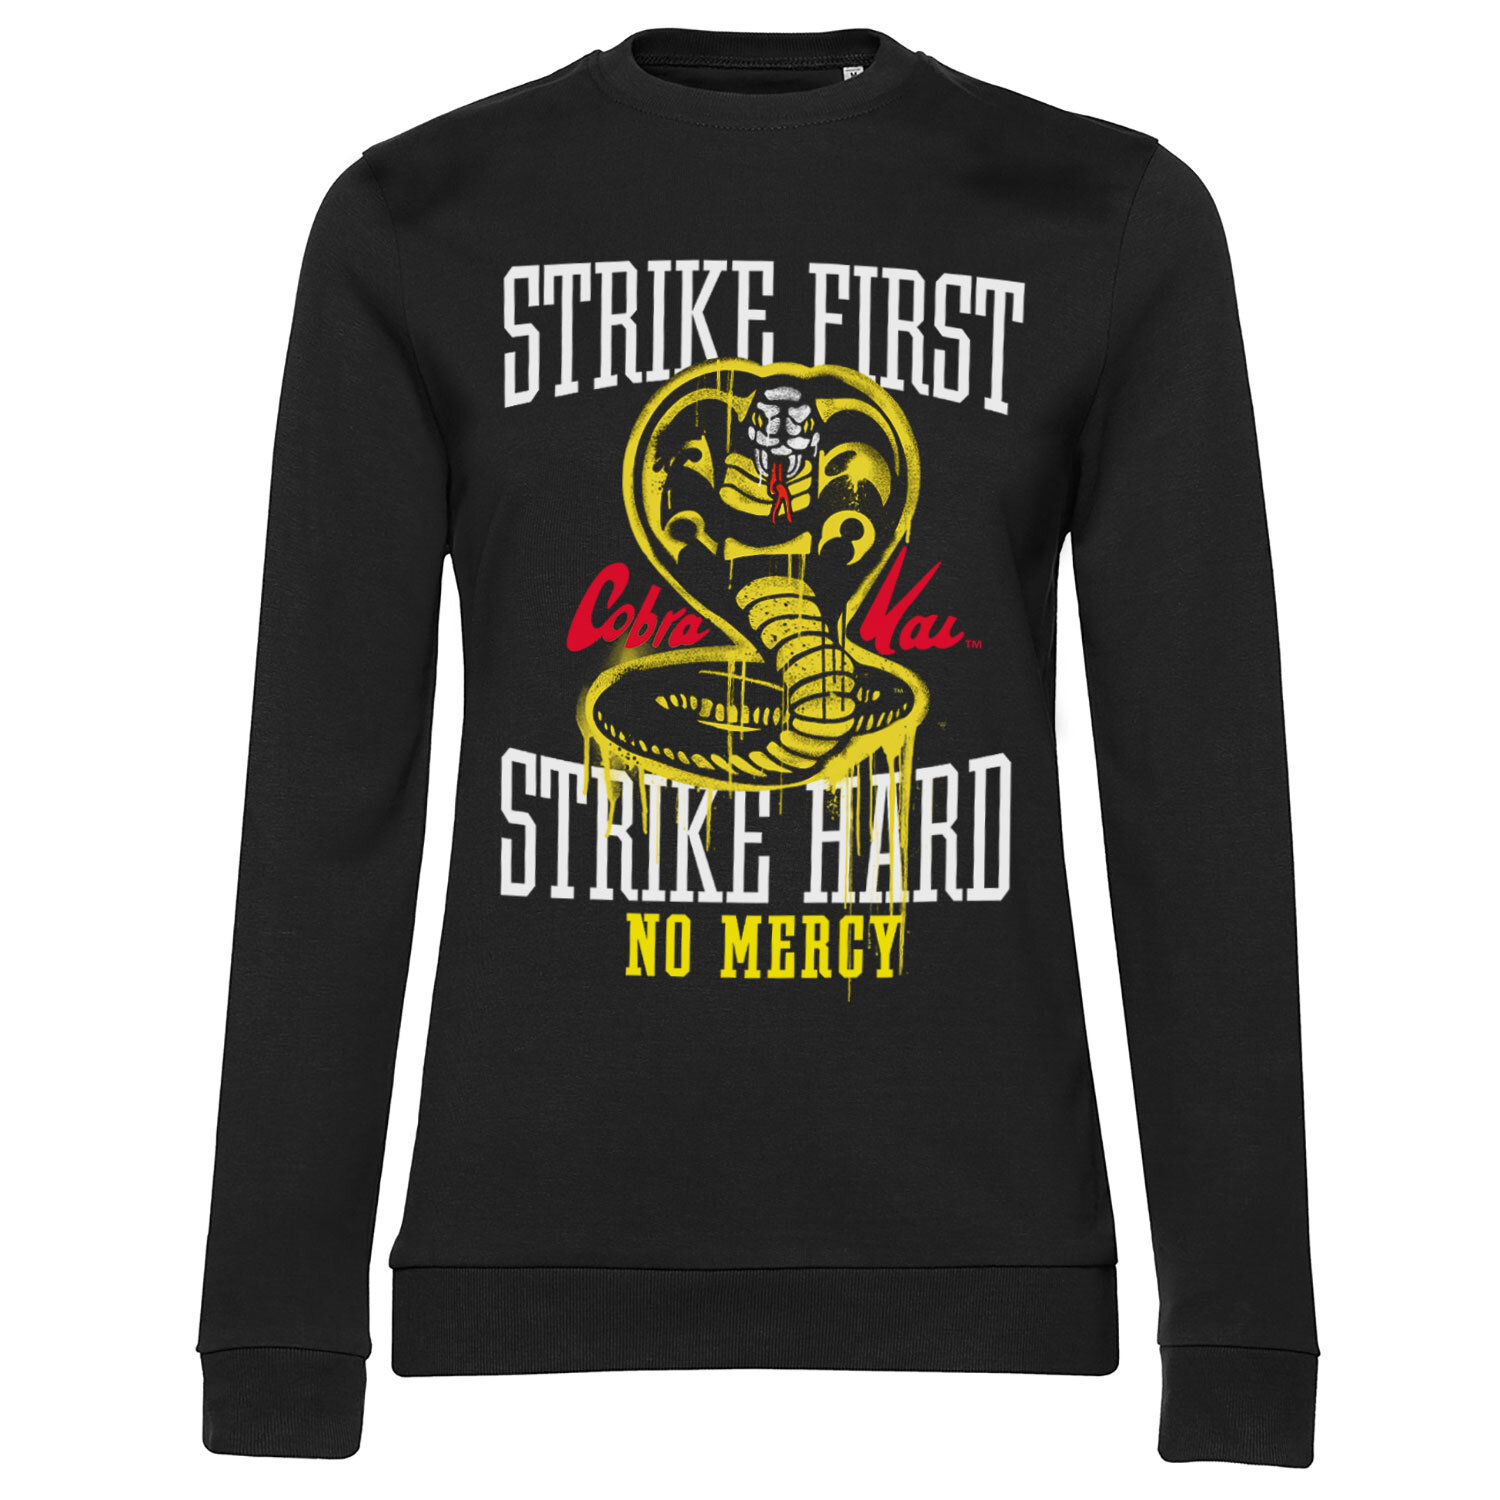 Strike First - Strike Hard - No Mercy Girly Sweatshirt